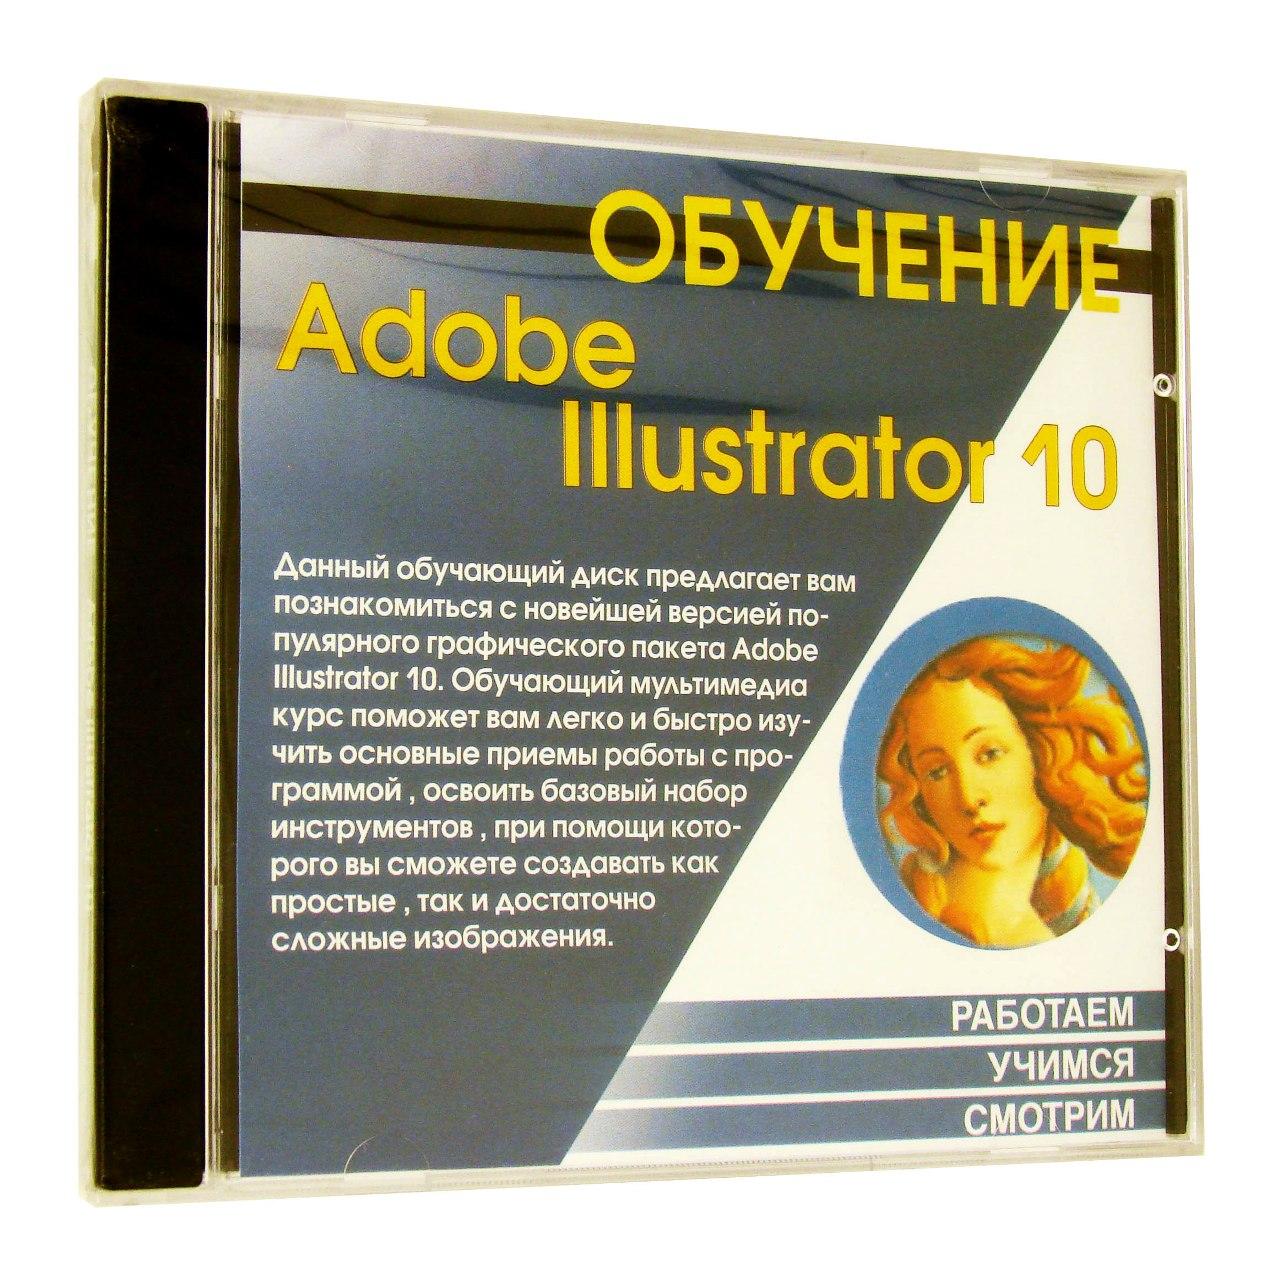  Adobe Illustrator 10 (PC)